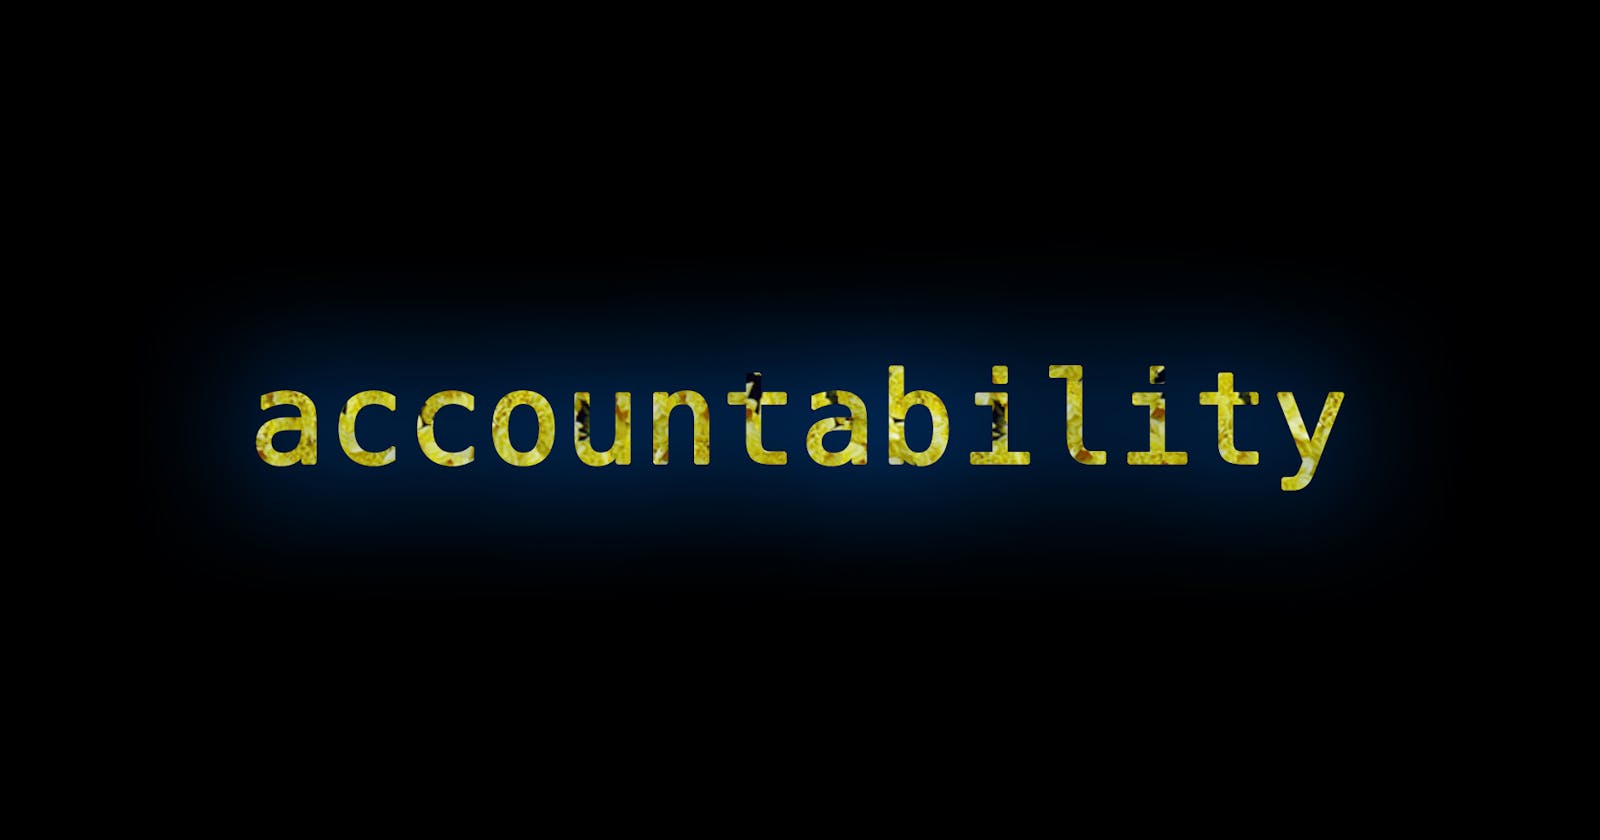 Hold yourself accountable